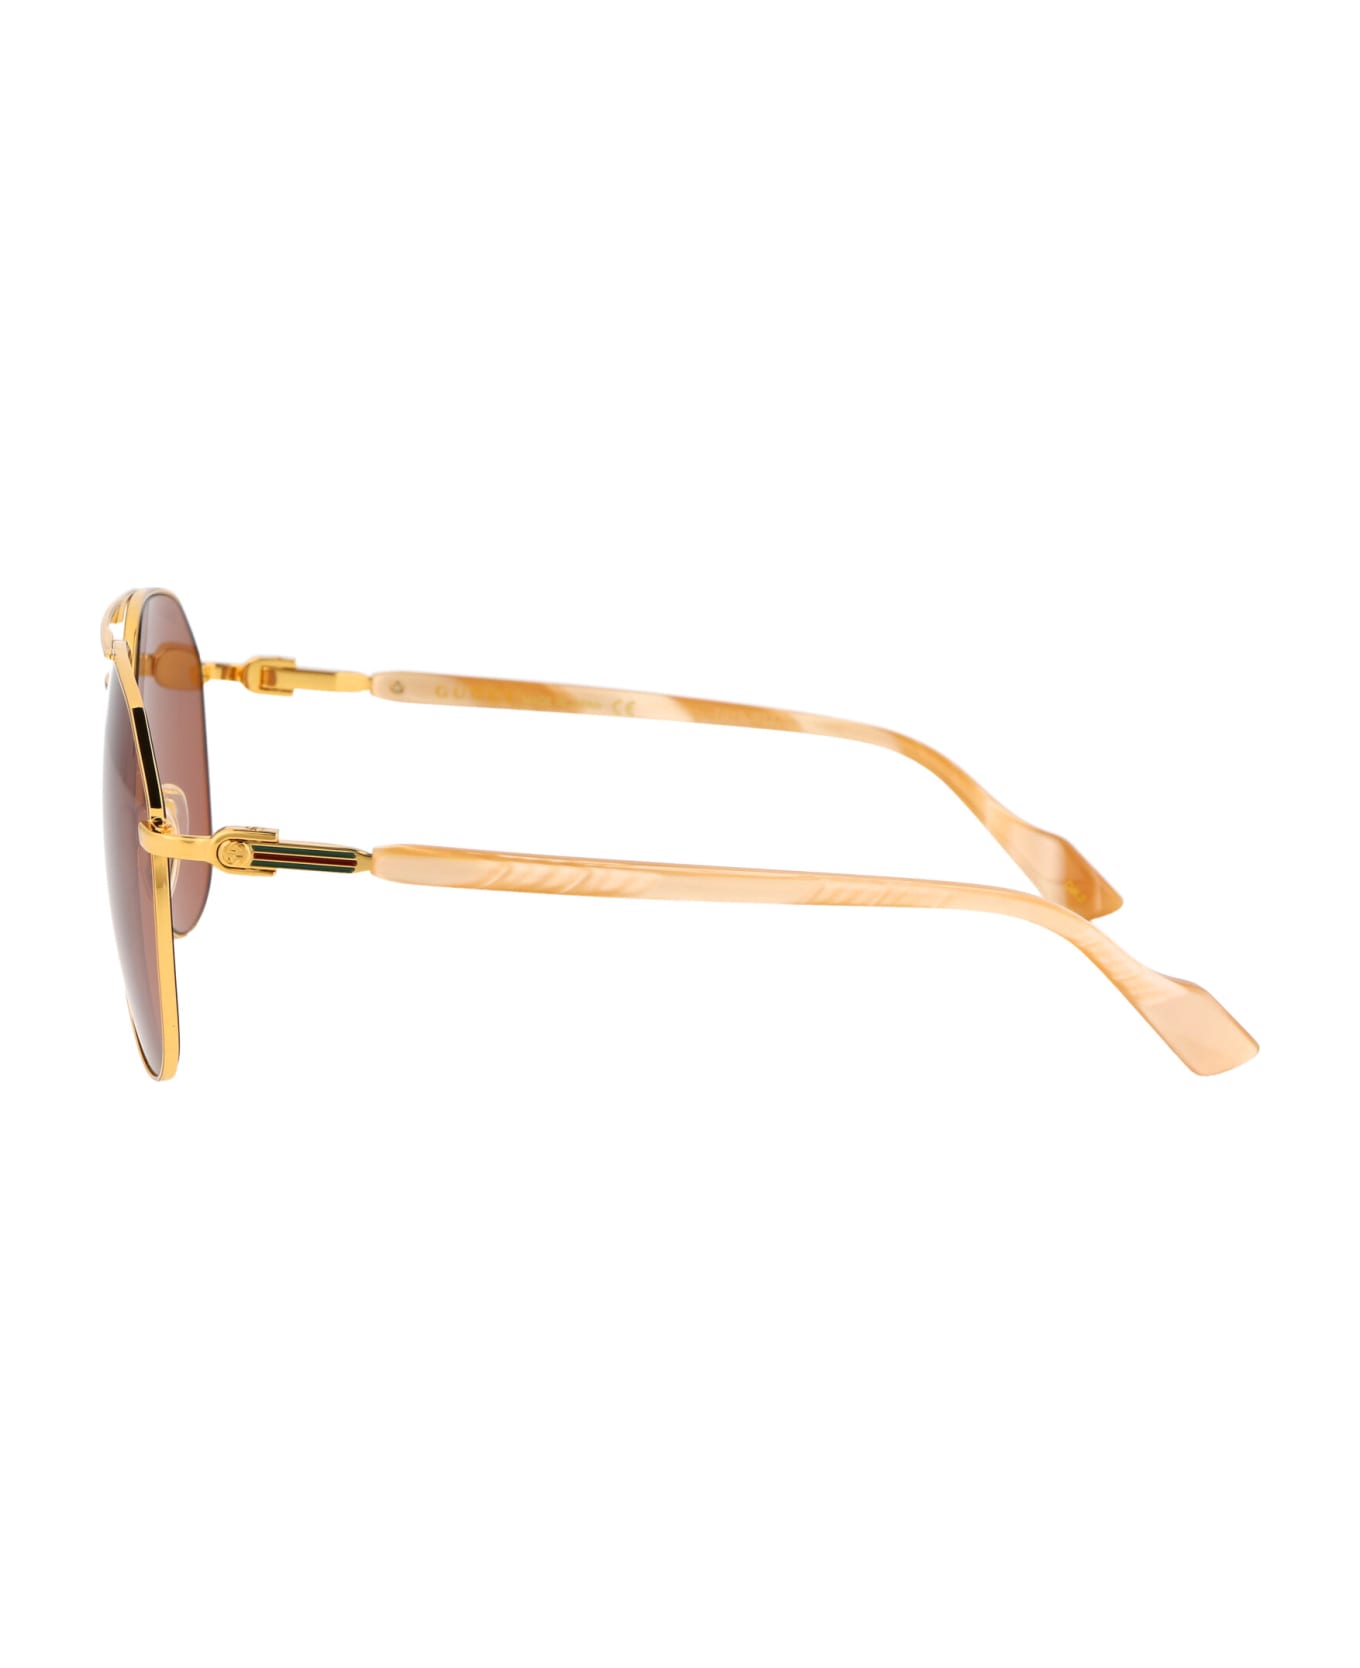 Gucci Eyewear Gg1220s Sunglasses - 003 GOLD GOLD BROWN サングラス